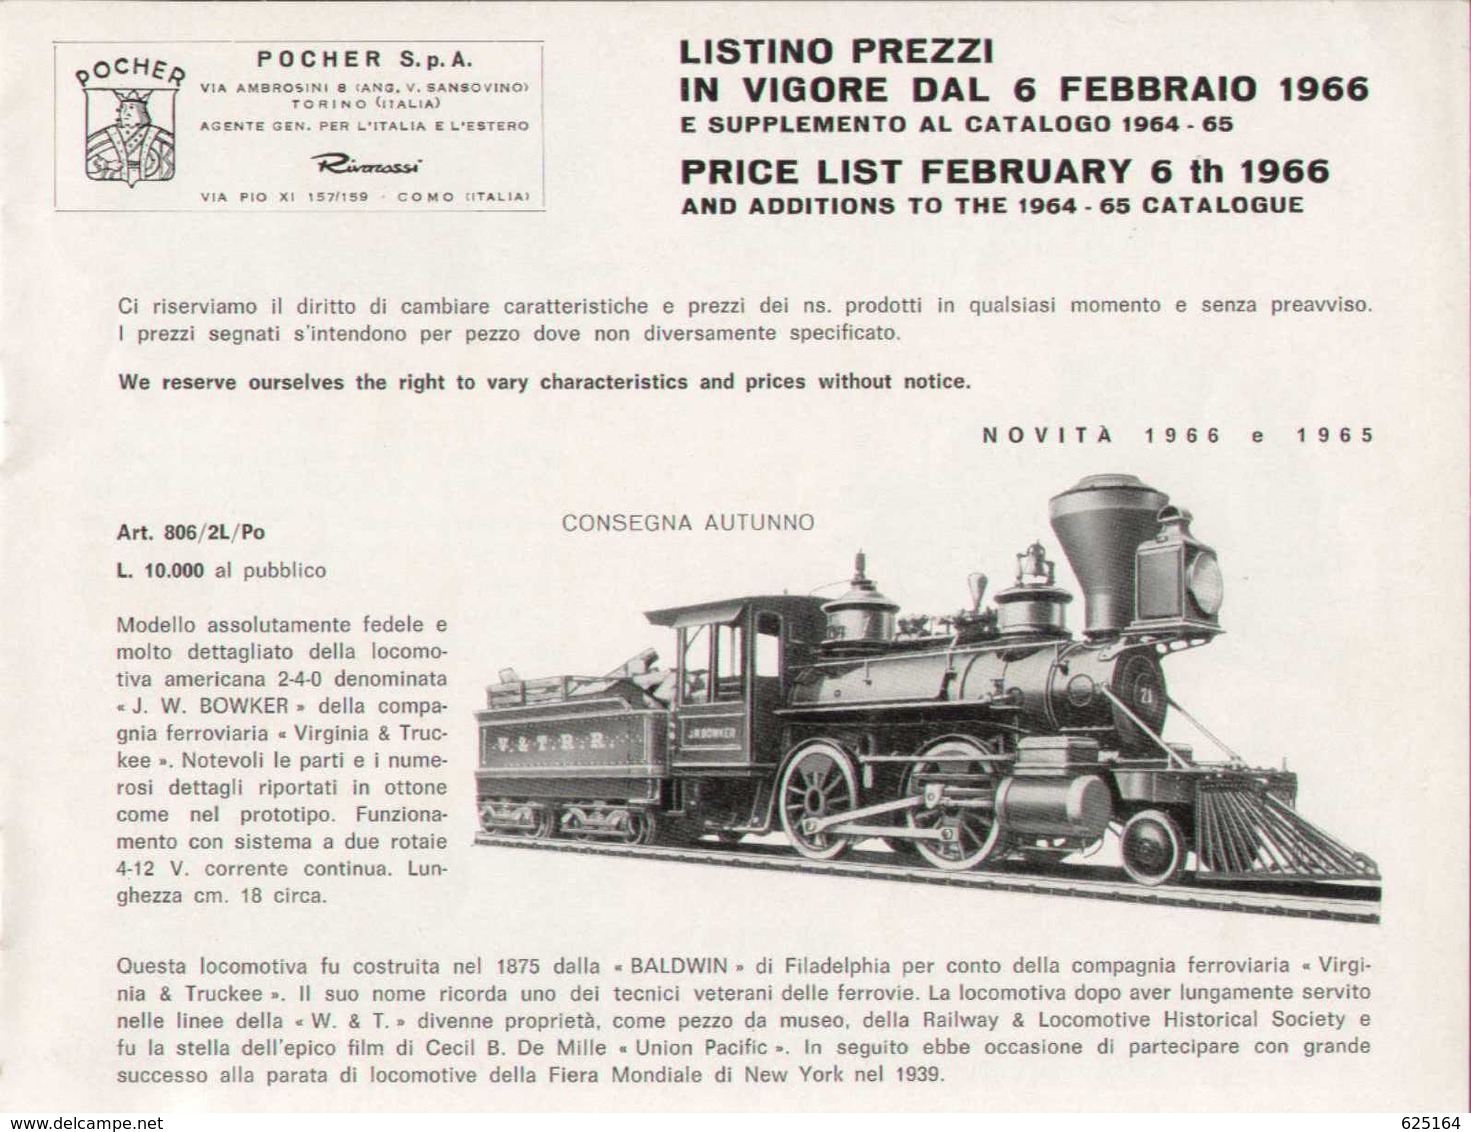 Catalogue POCHER 1964-65 Supplemento Al Catalogo Trains HO - Cannon - FIAT 130 1:32 + Price List LIT 6/2/1966 - English